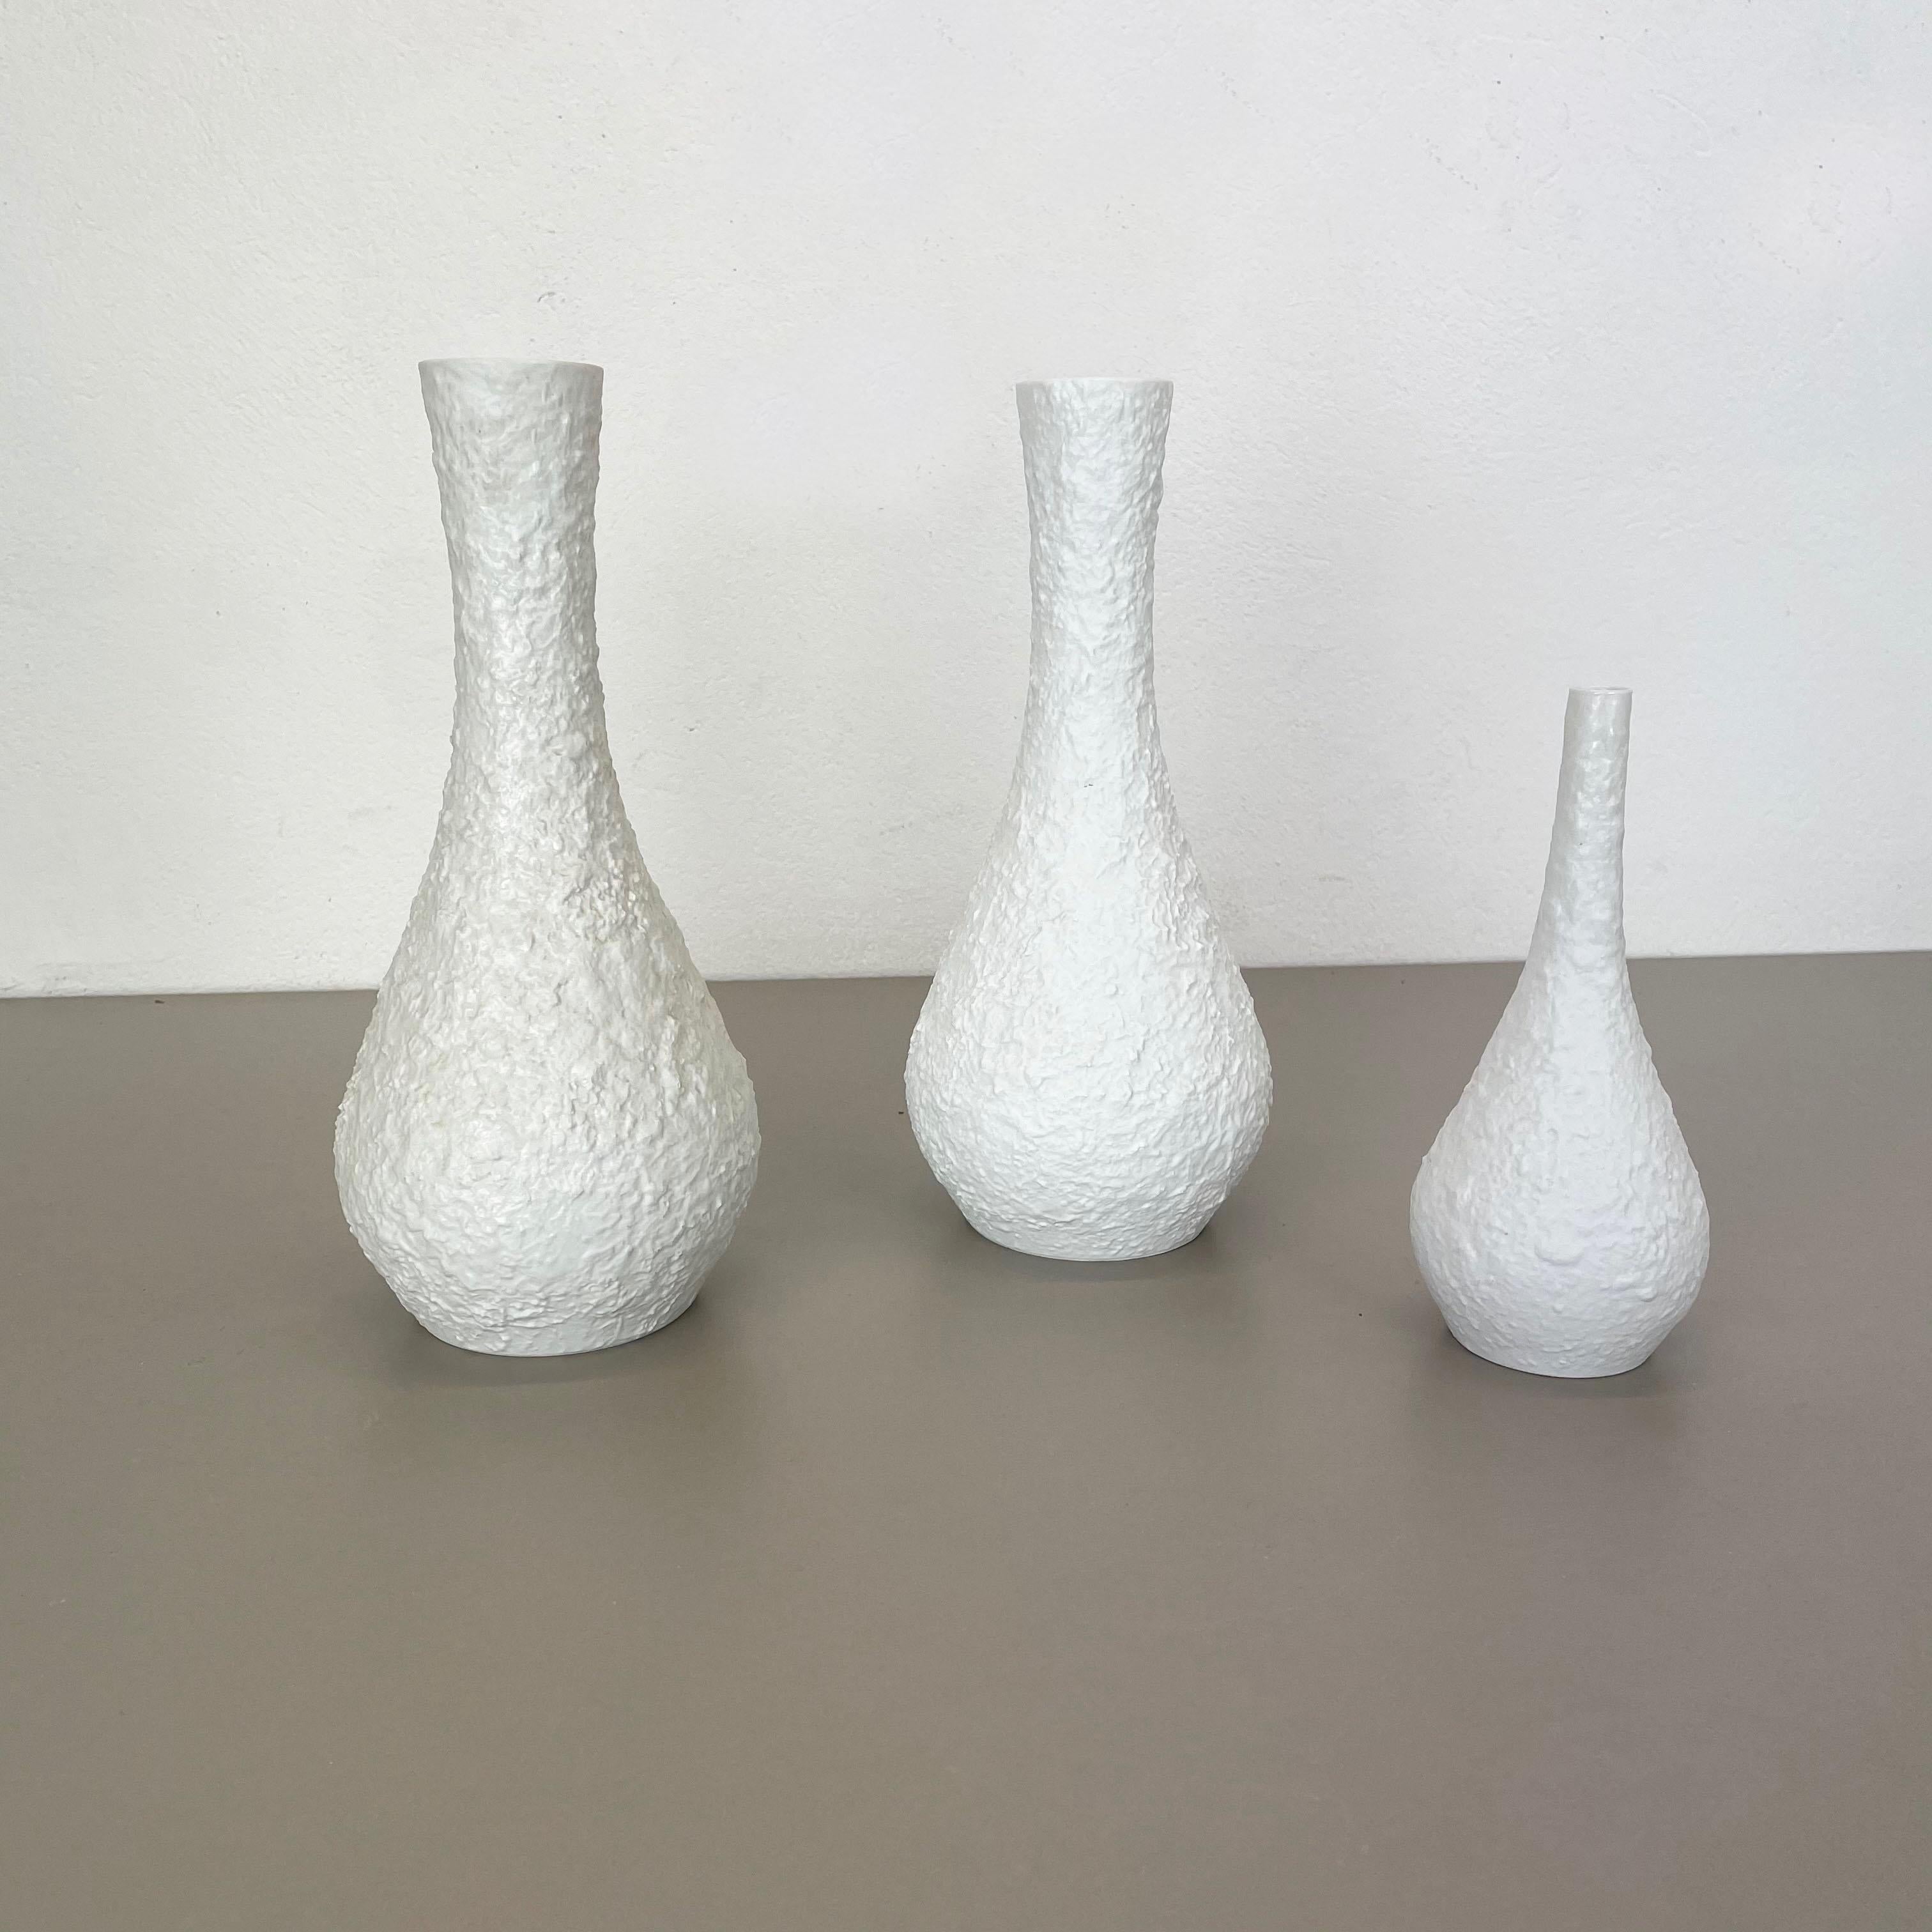 Mid-Century Modern Set of 3 OP Art Biscuit Porcelain Vases by Edelstein Bavaria, Germany, 1970s For Sale